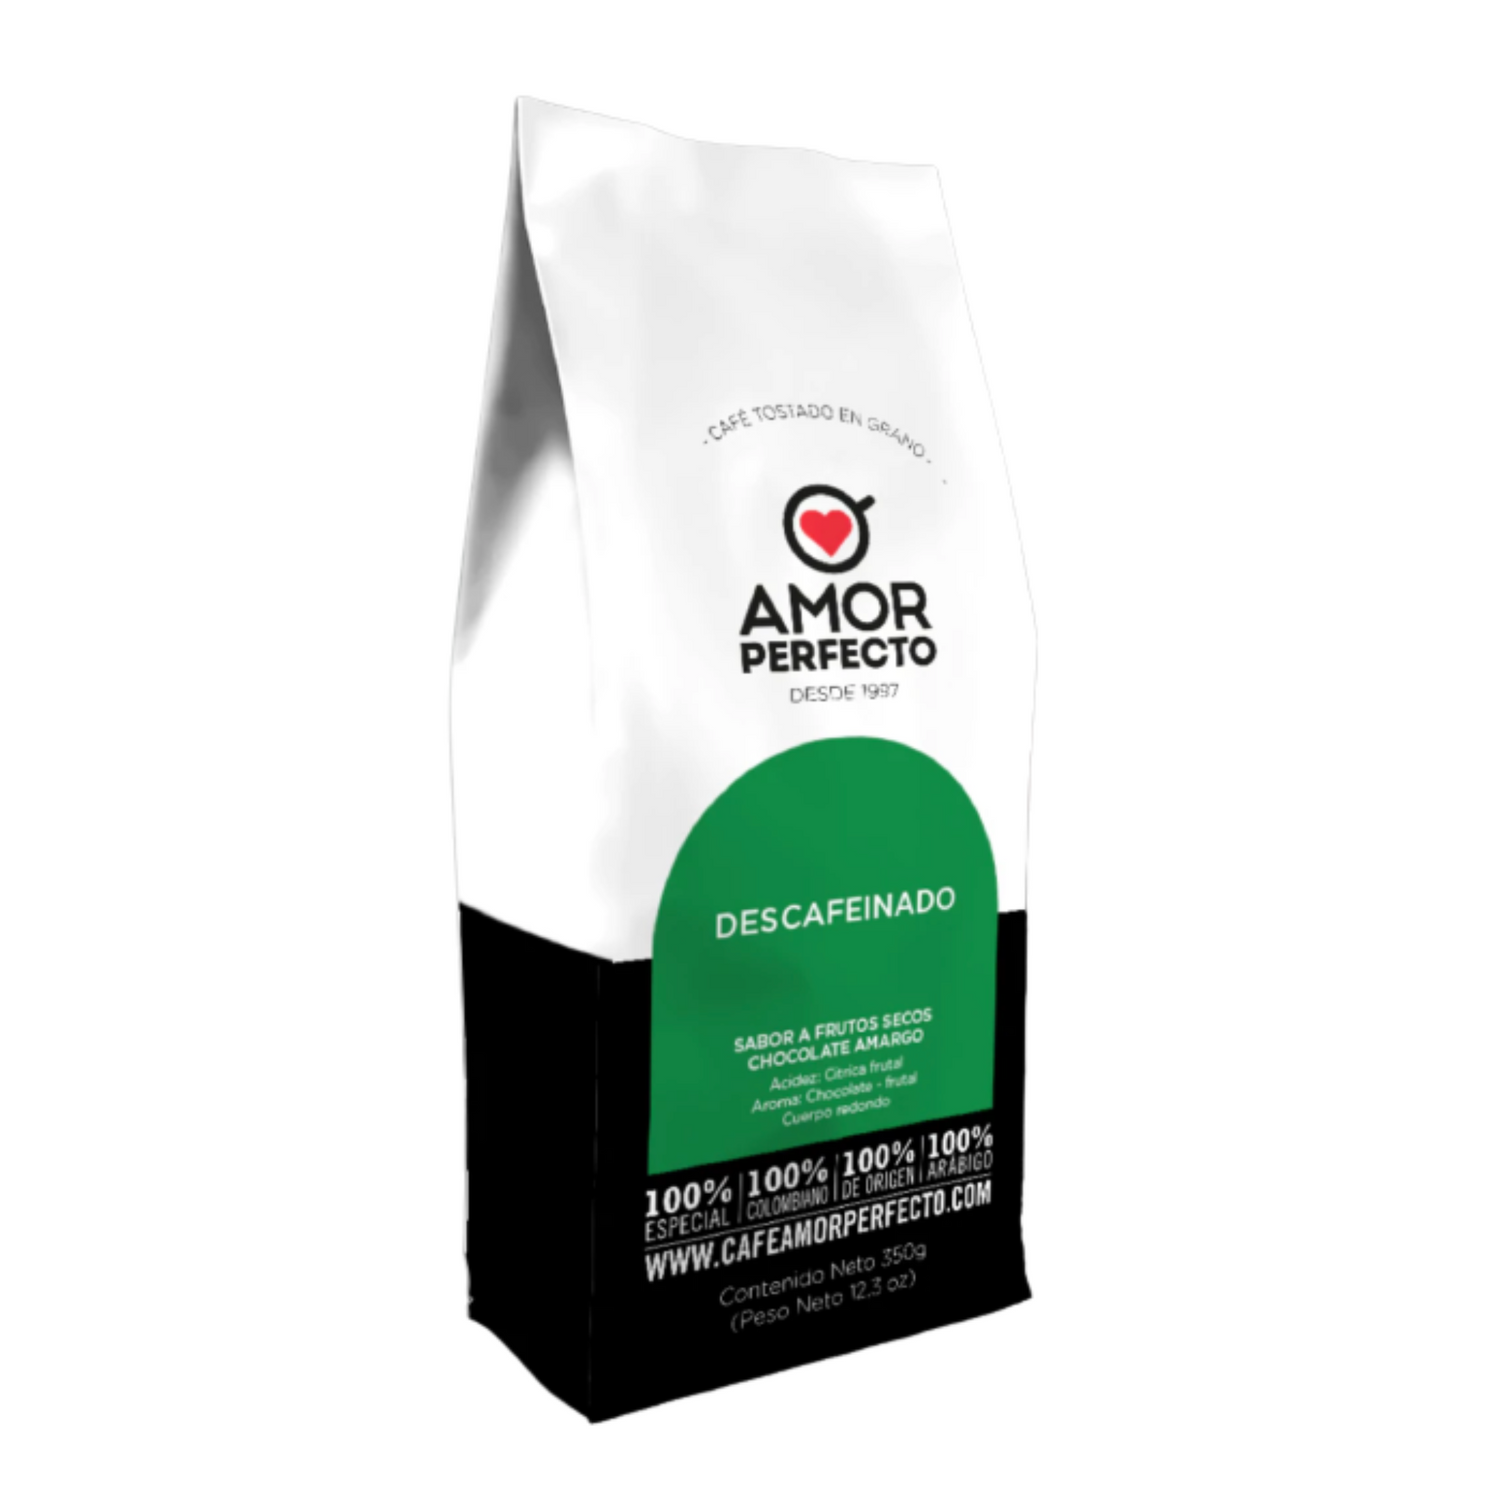 Amor Perfecto Decaffeinated single origin - low acid coffee